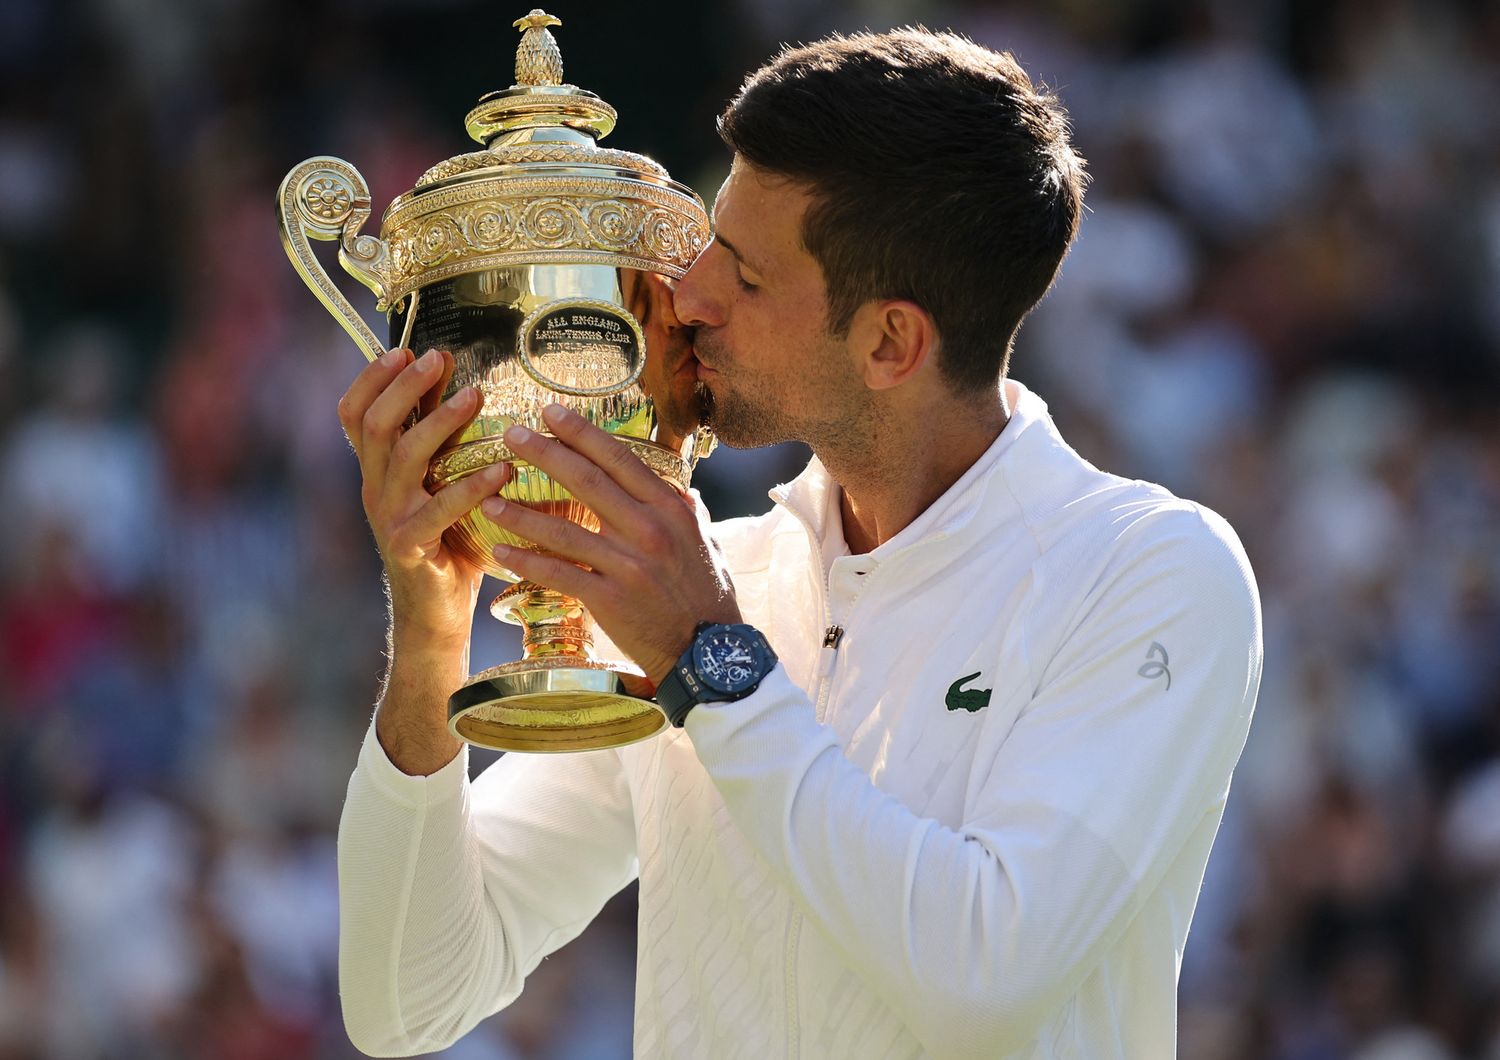 Wimbledon Djokovic doma Kyrgios settimo sigillo&nbsp;&nbsp;